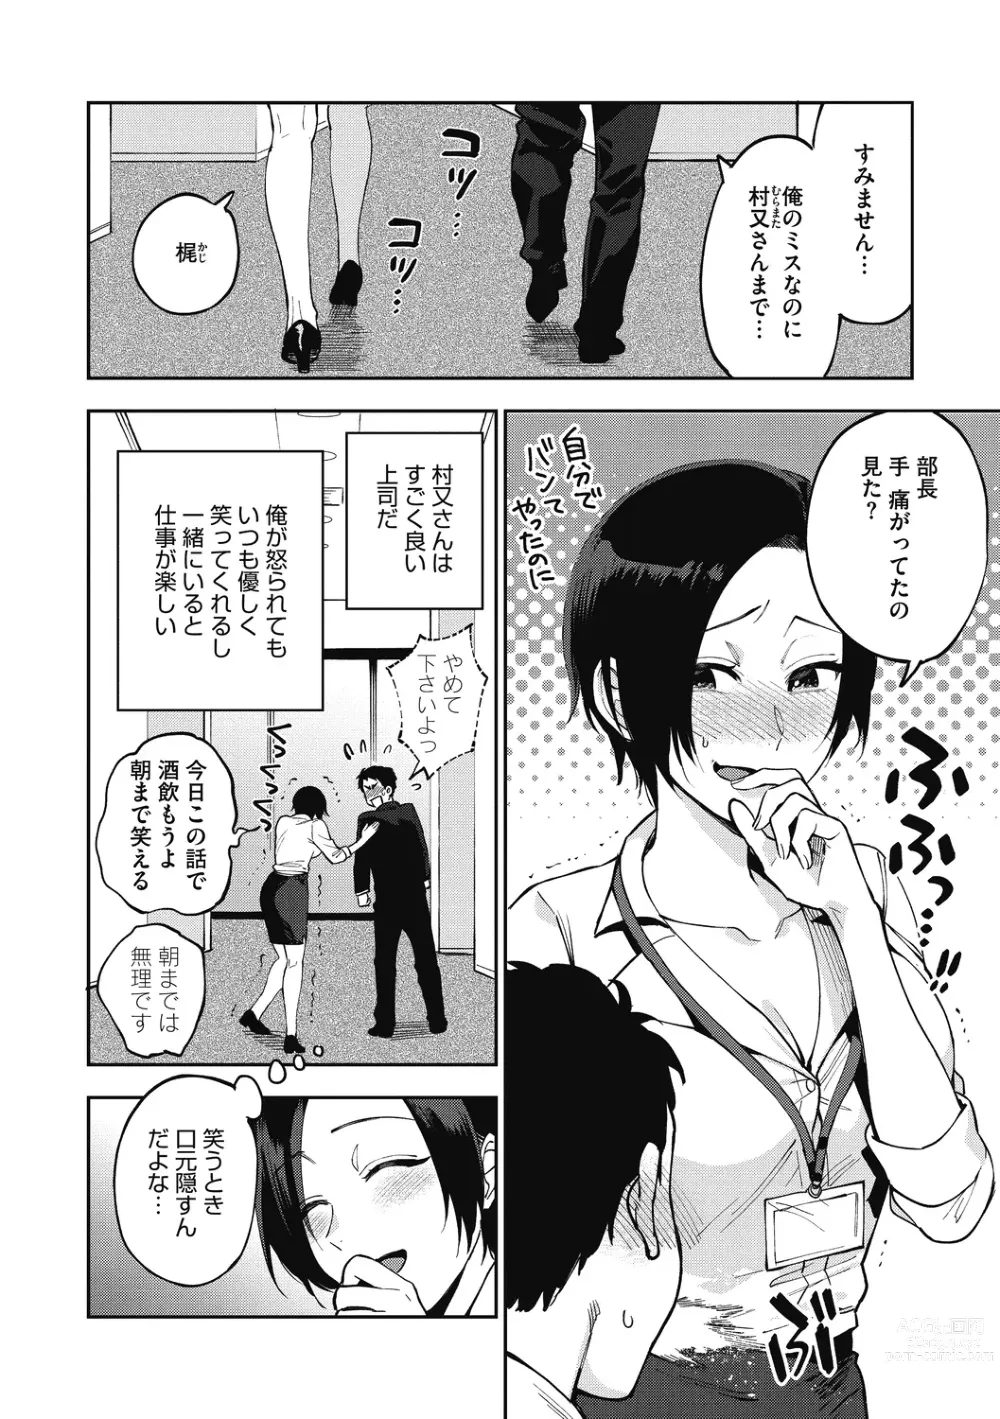 Page 8 of manga Muramata-san no Himitsu